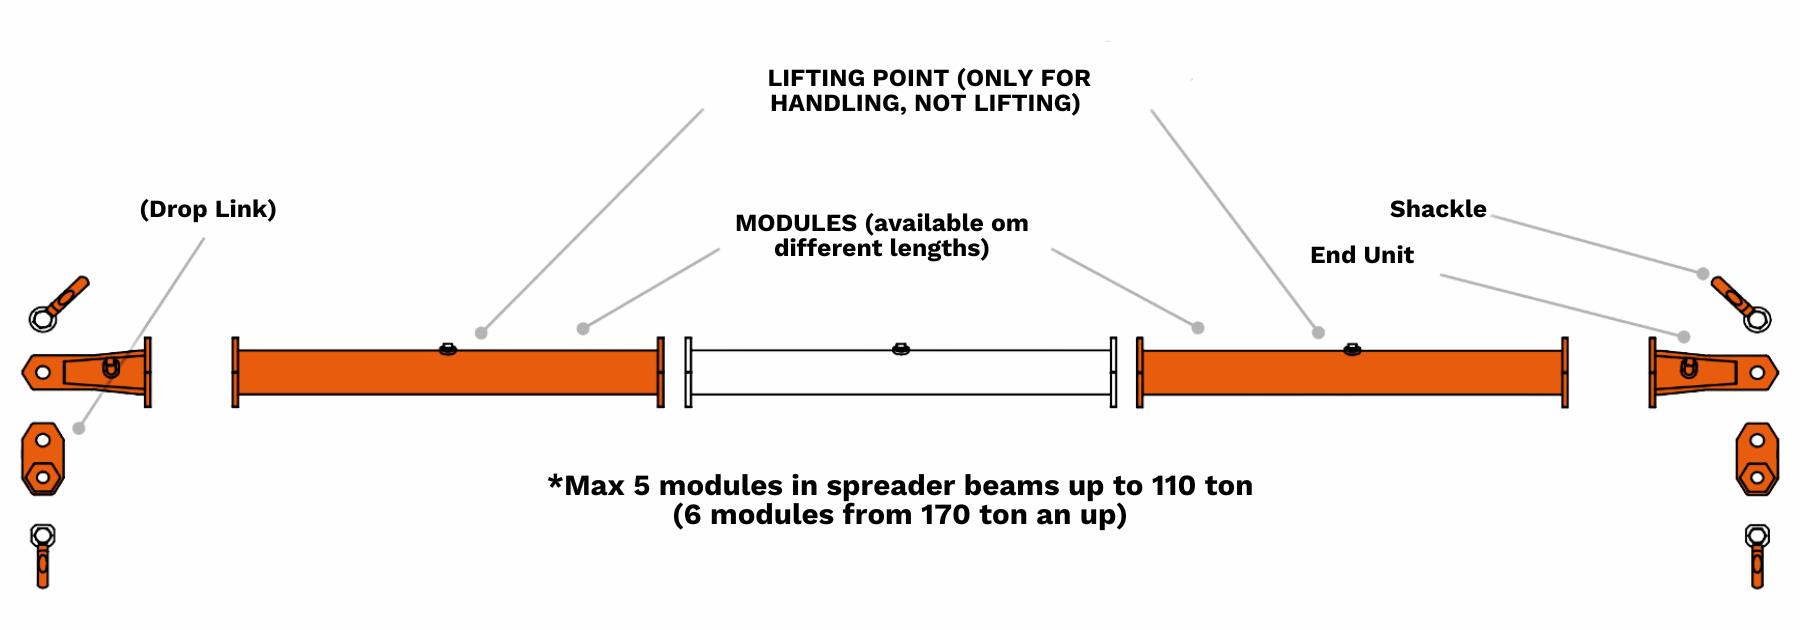 Modular-spreader-beams-explanation